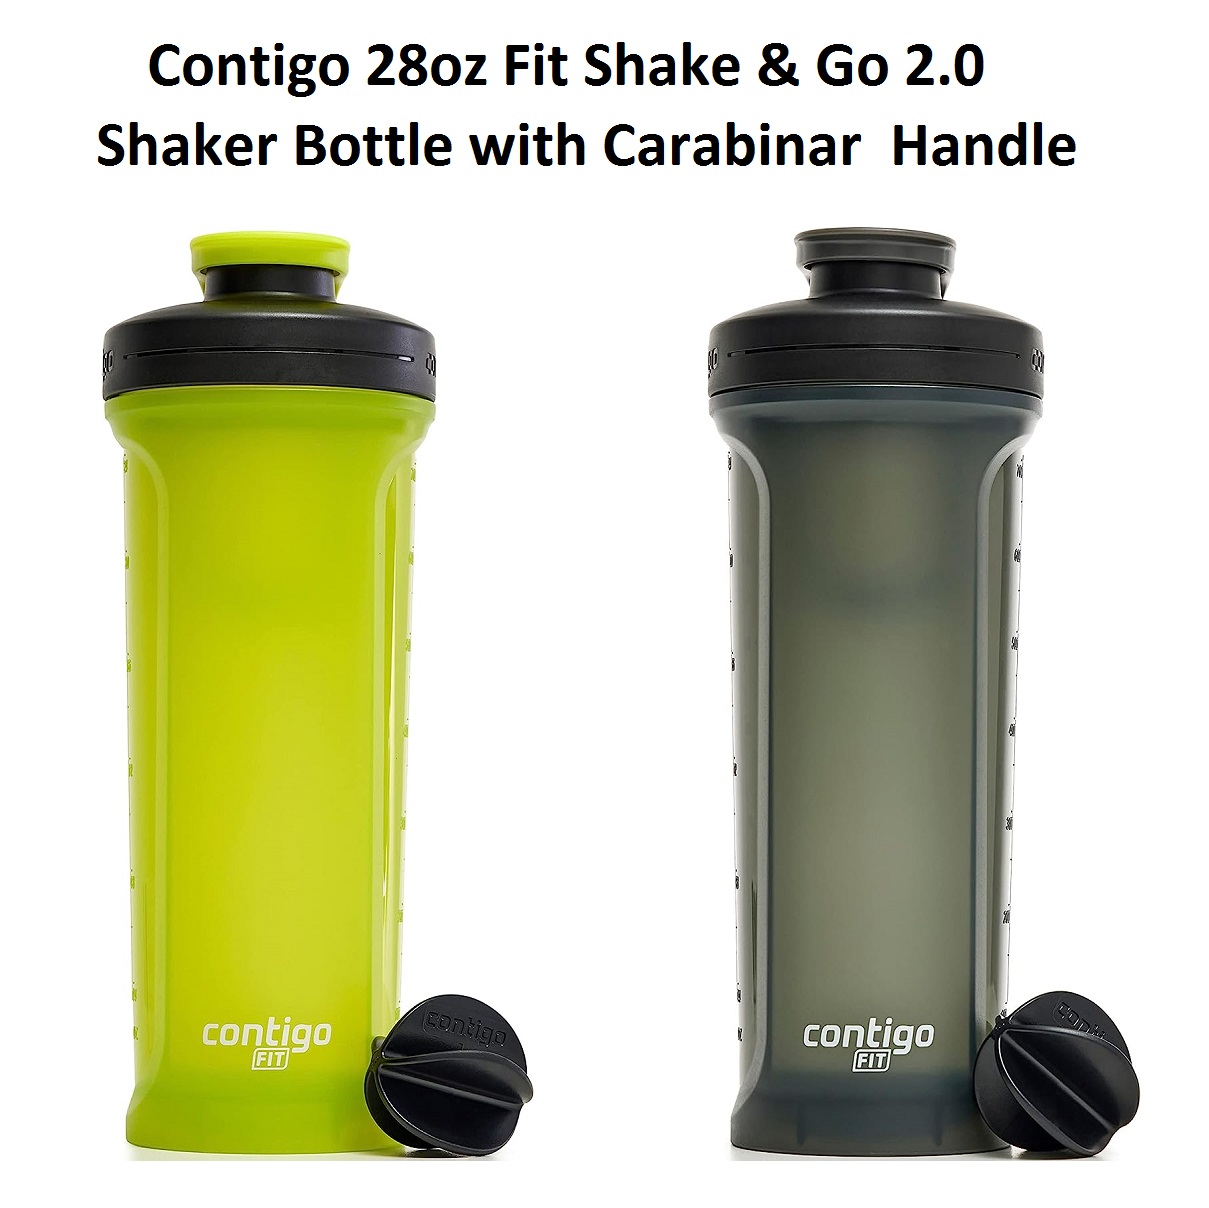 Contigo Shake & Go Fit Stainless Steel Shaker Bottle, Flash, 24 oz